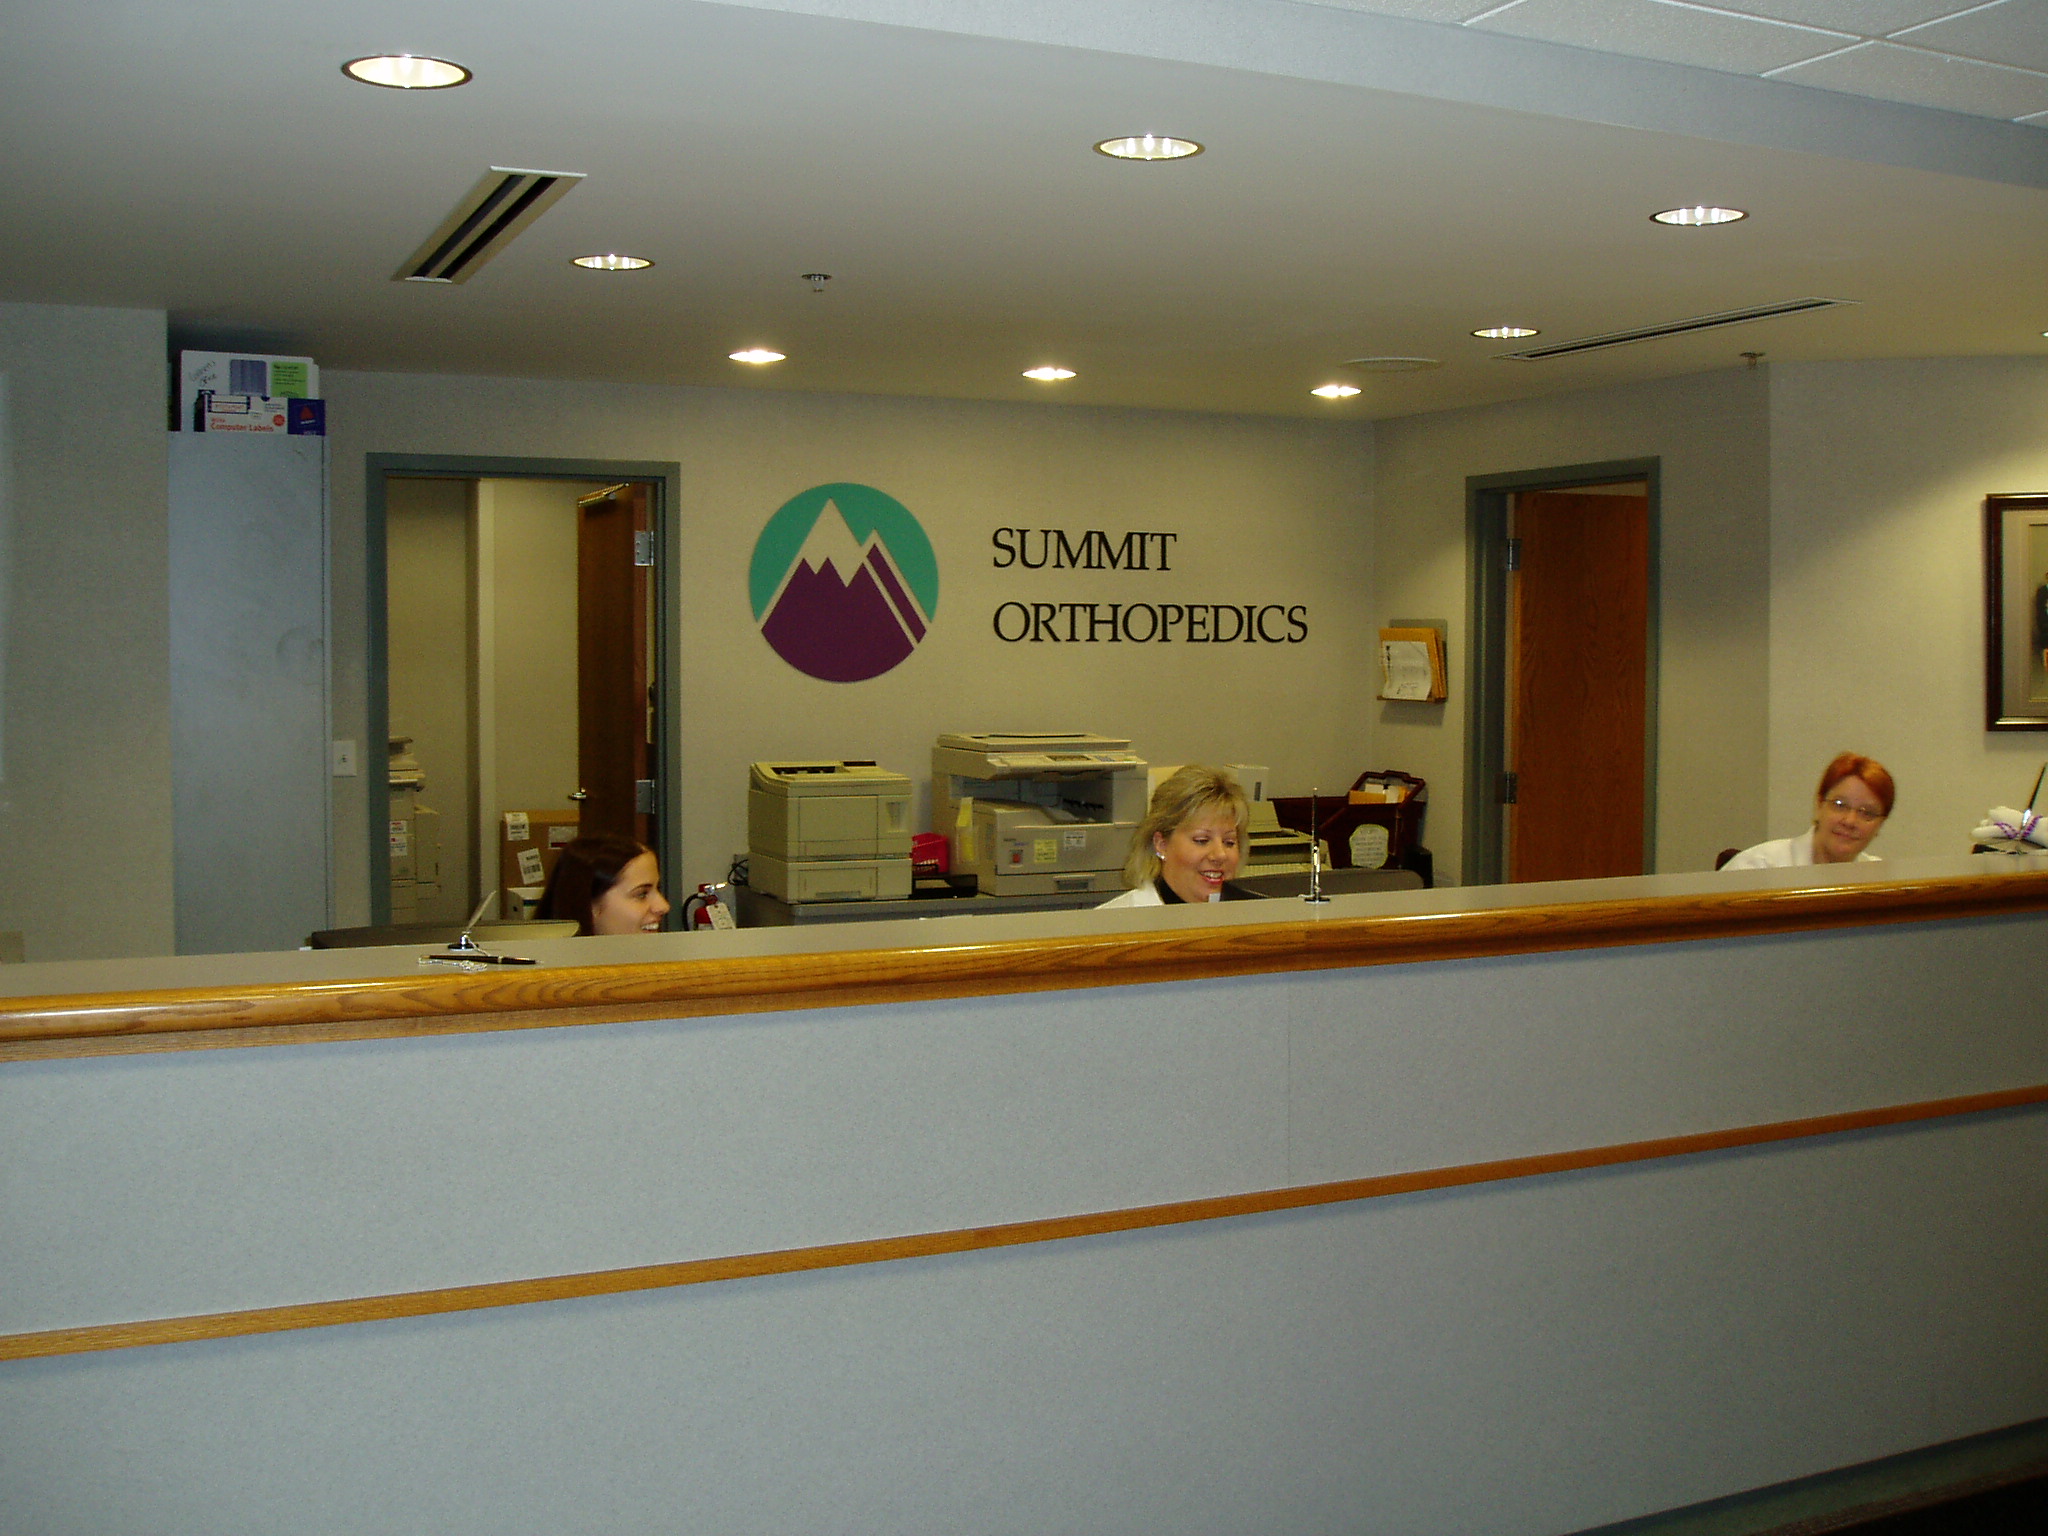 Summit Orthopedics Waiting area/front desk 1